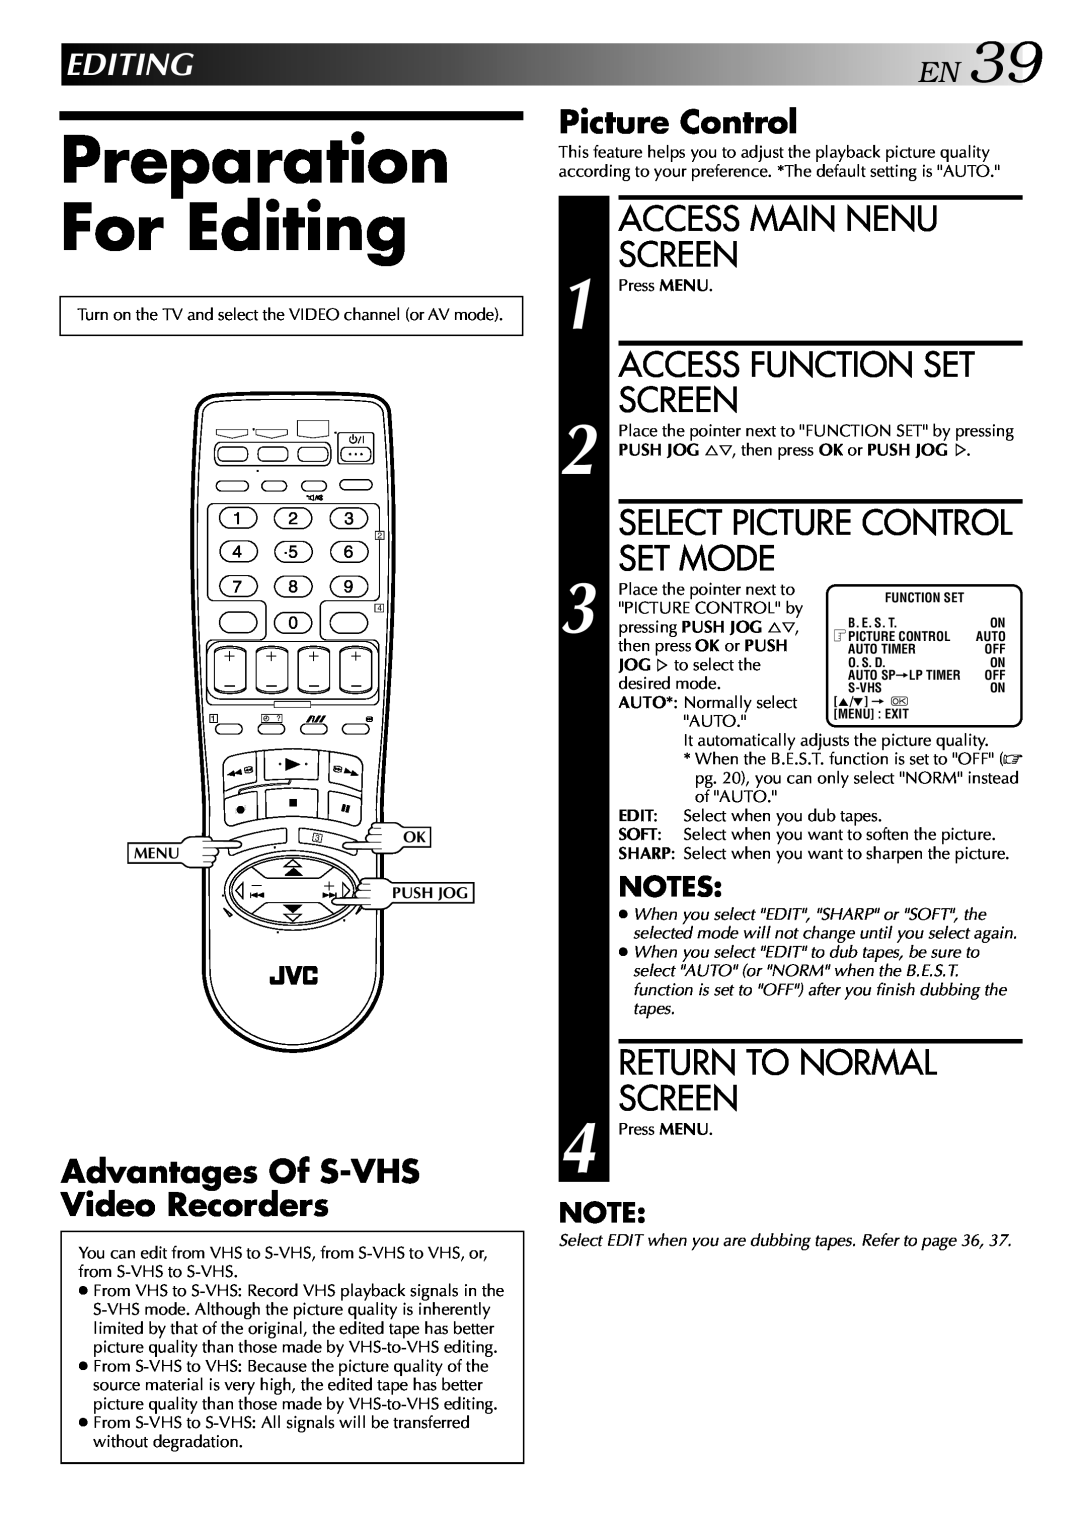 JVC LPT0428-001A Preparation For Editing, EN39, Access Main Nenu, Set Mode, Advantages Of S-VHS Video Recorders, Screen 